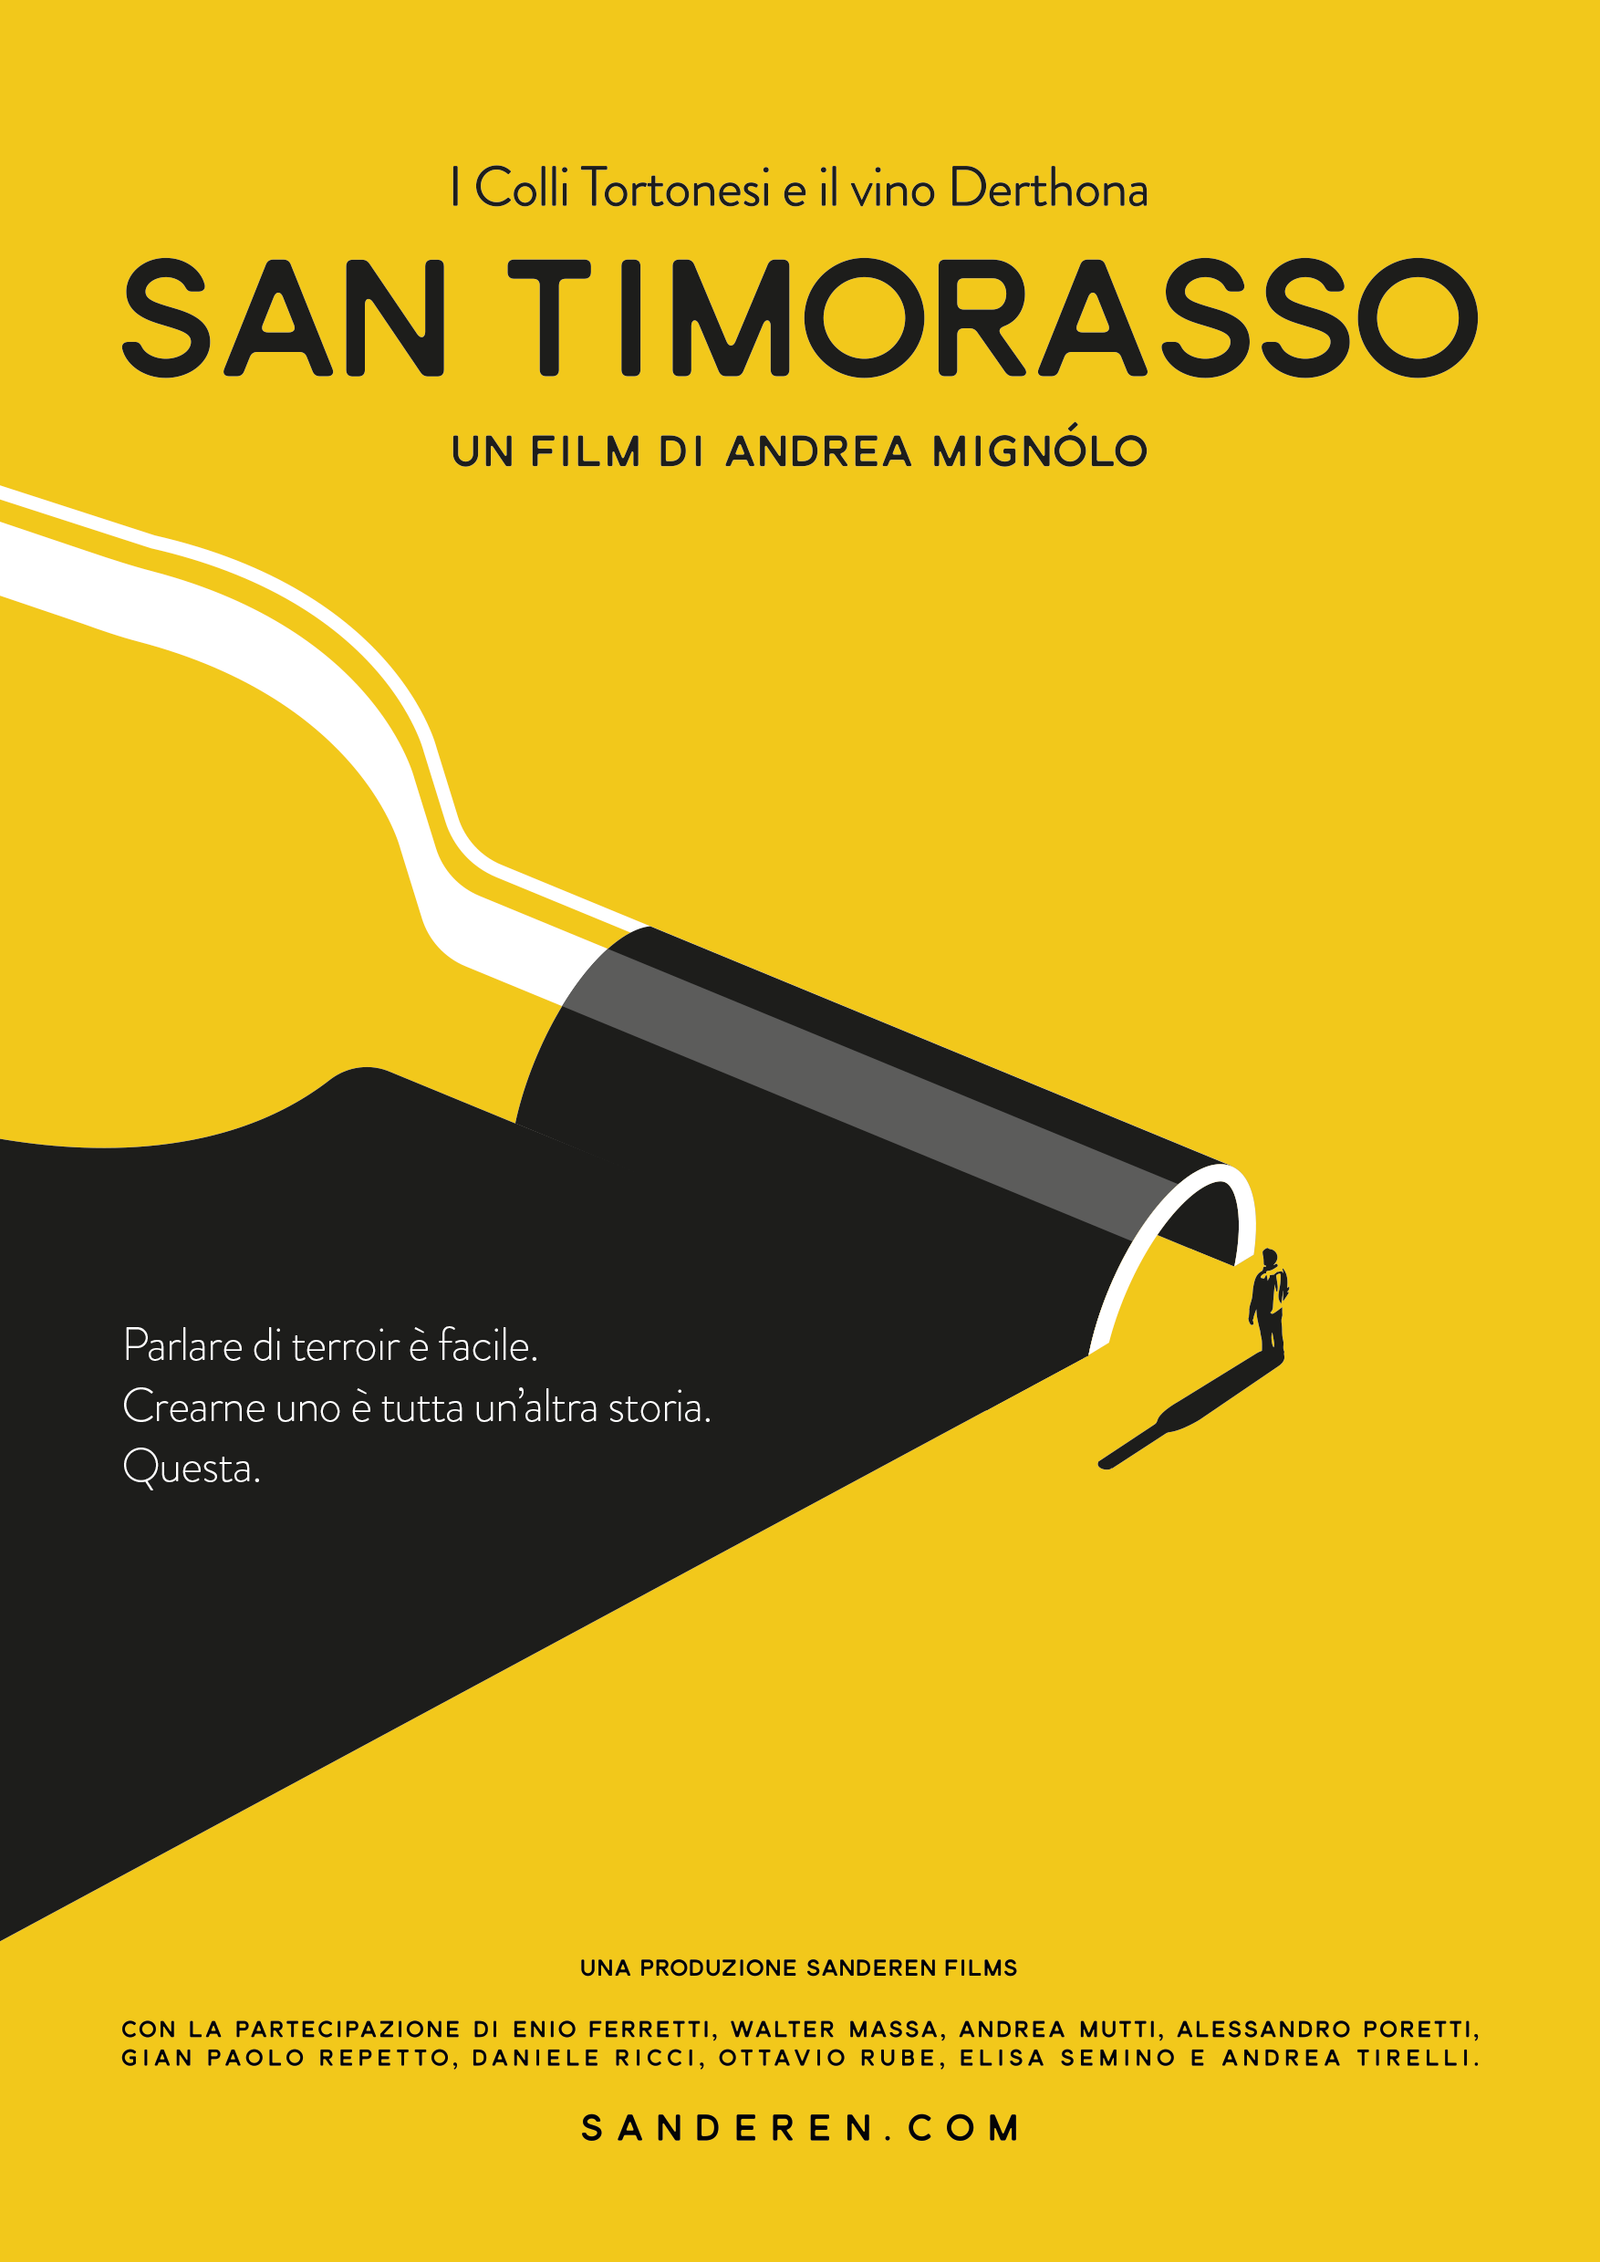 San Timorasso, film documentario Colli Tortonesi vino Derthona